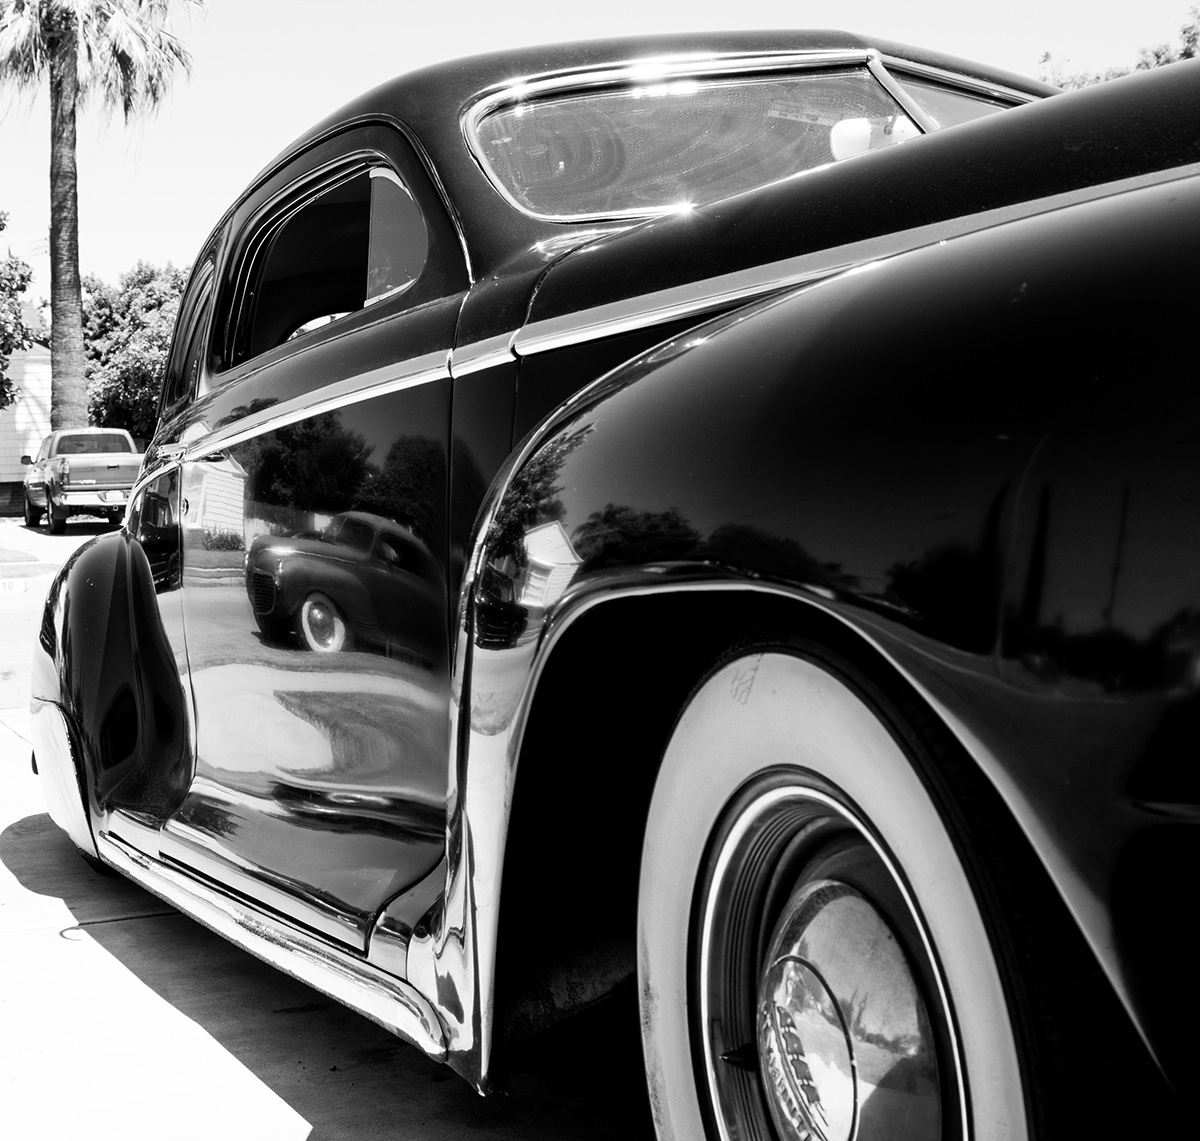 Adobe Portfolio Rockabilly lifestyle people portraits tattoos Cars Classic customcars Outdoor vintage Style California